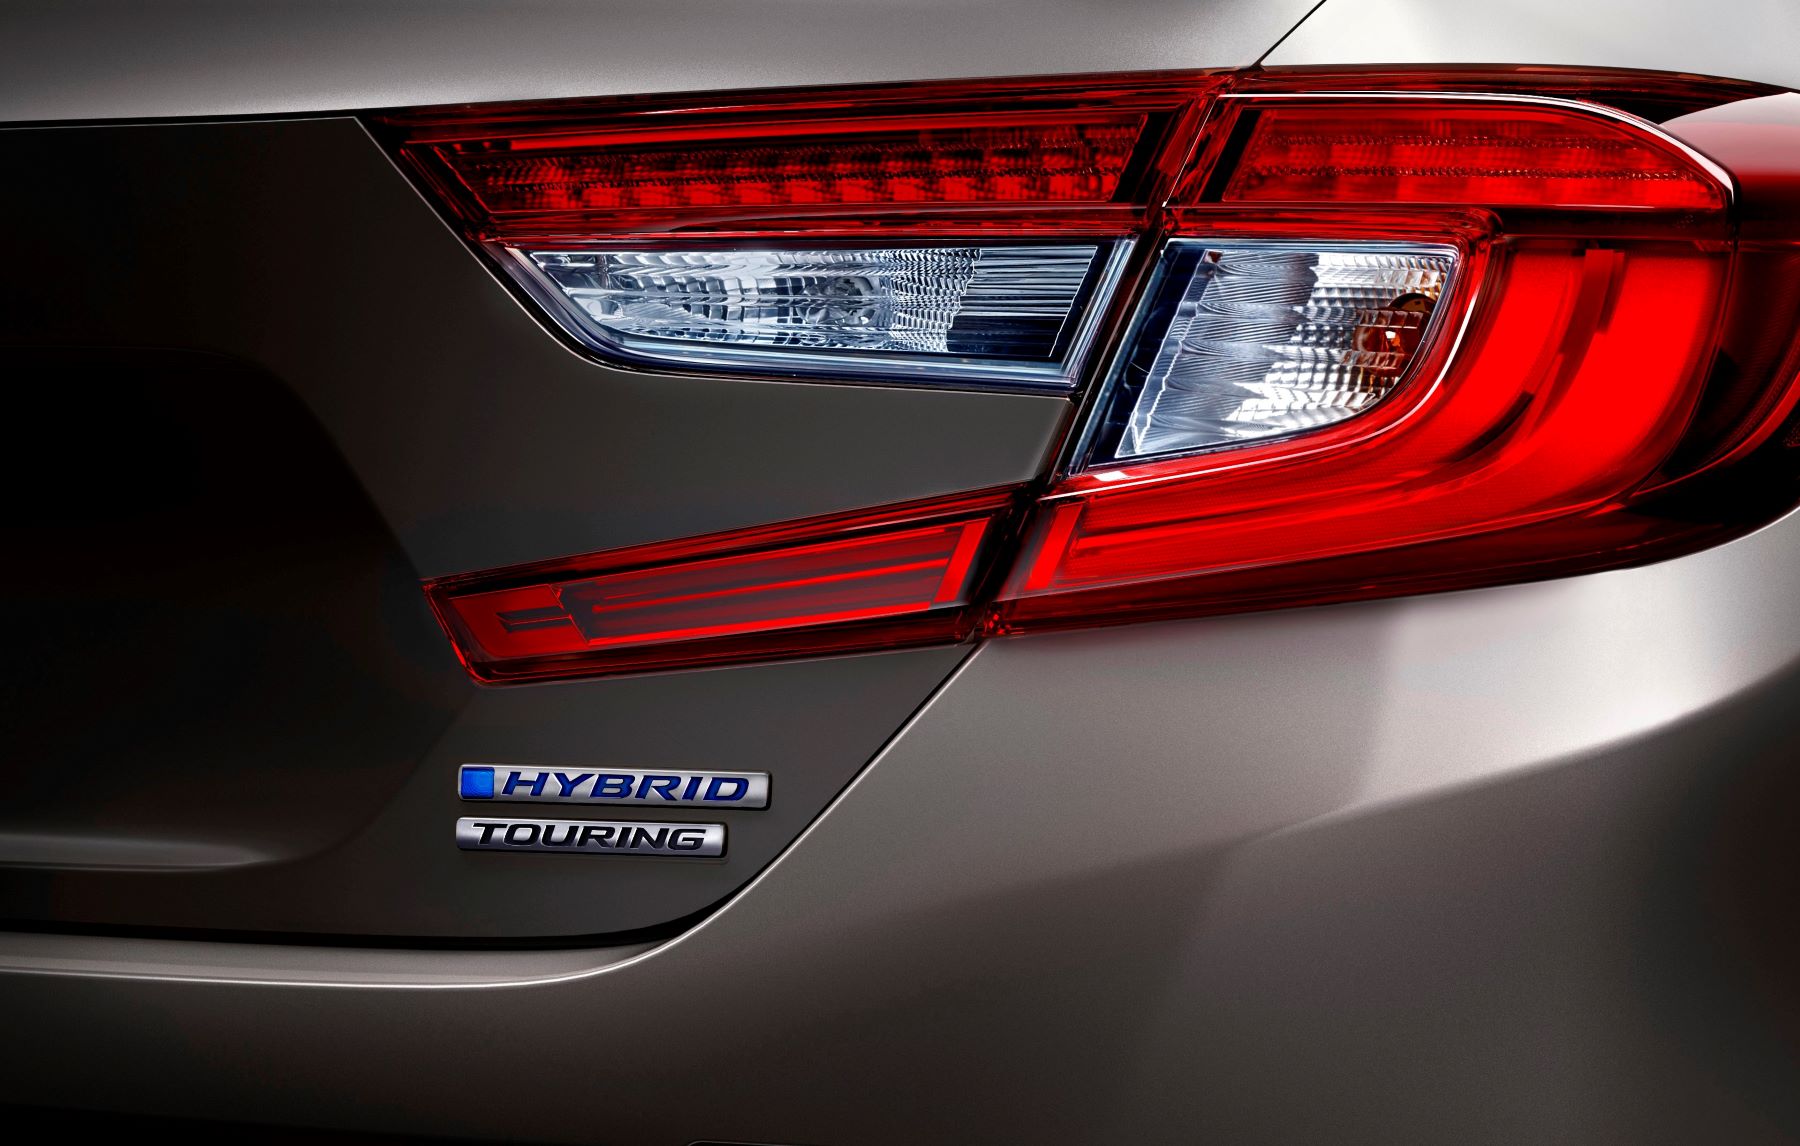 The rear badging on the trunk of a Honda Accord Hybrid Touring midsize sedan model